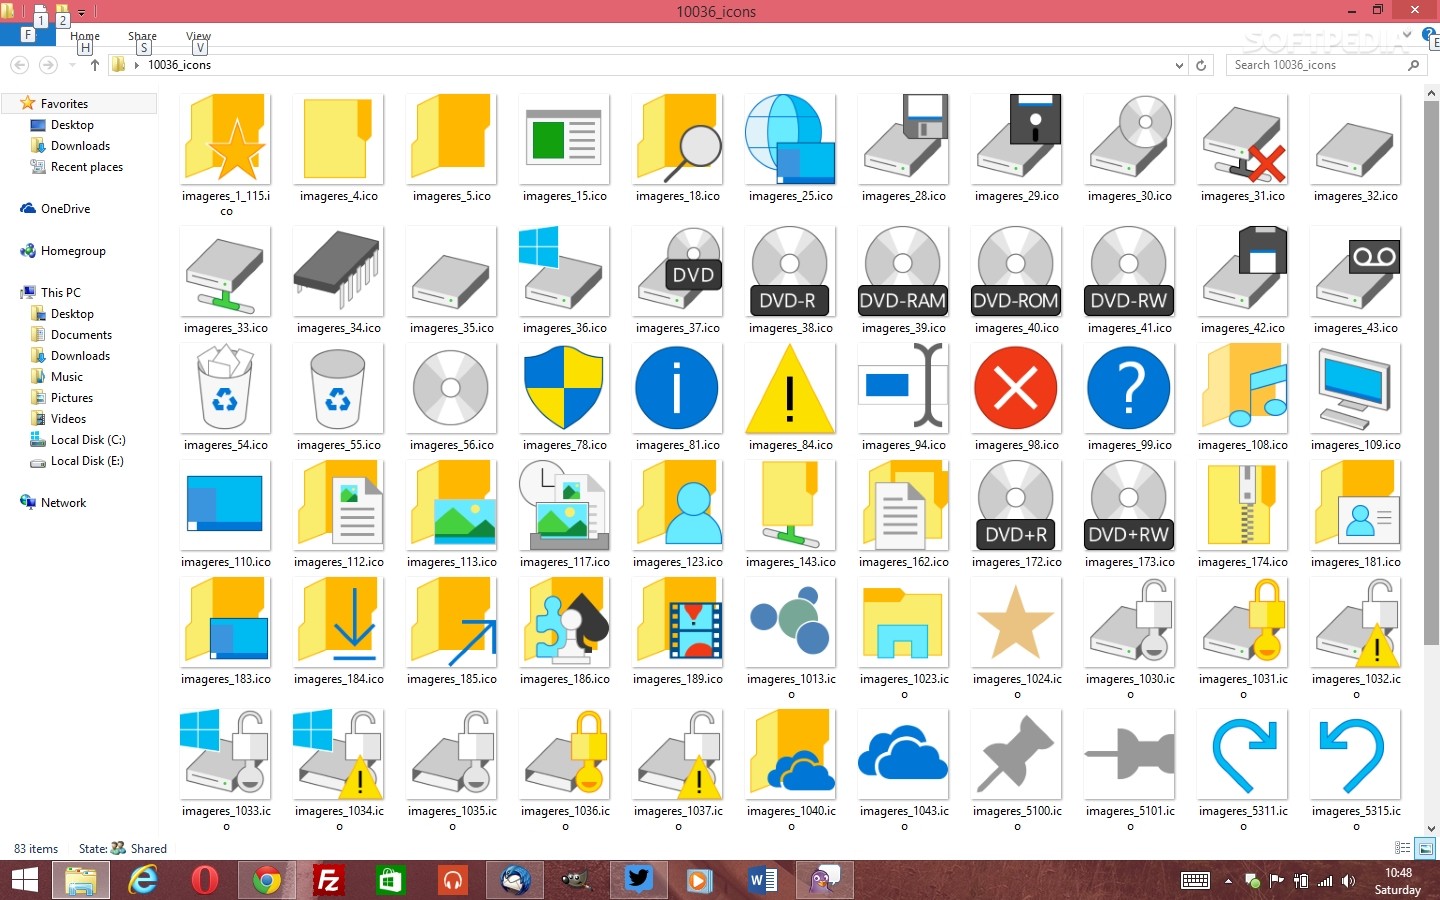 Windows 10 icons - Download 200  Free Windows icons